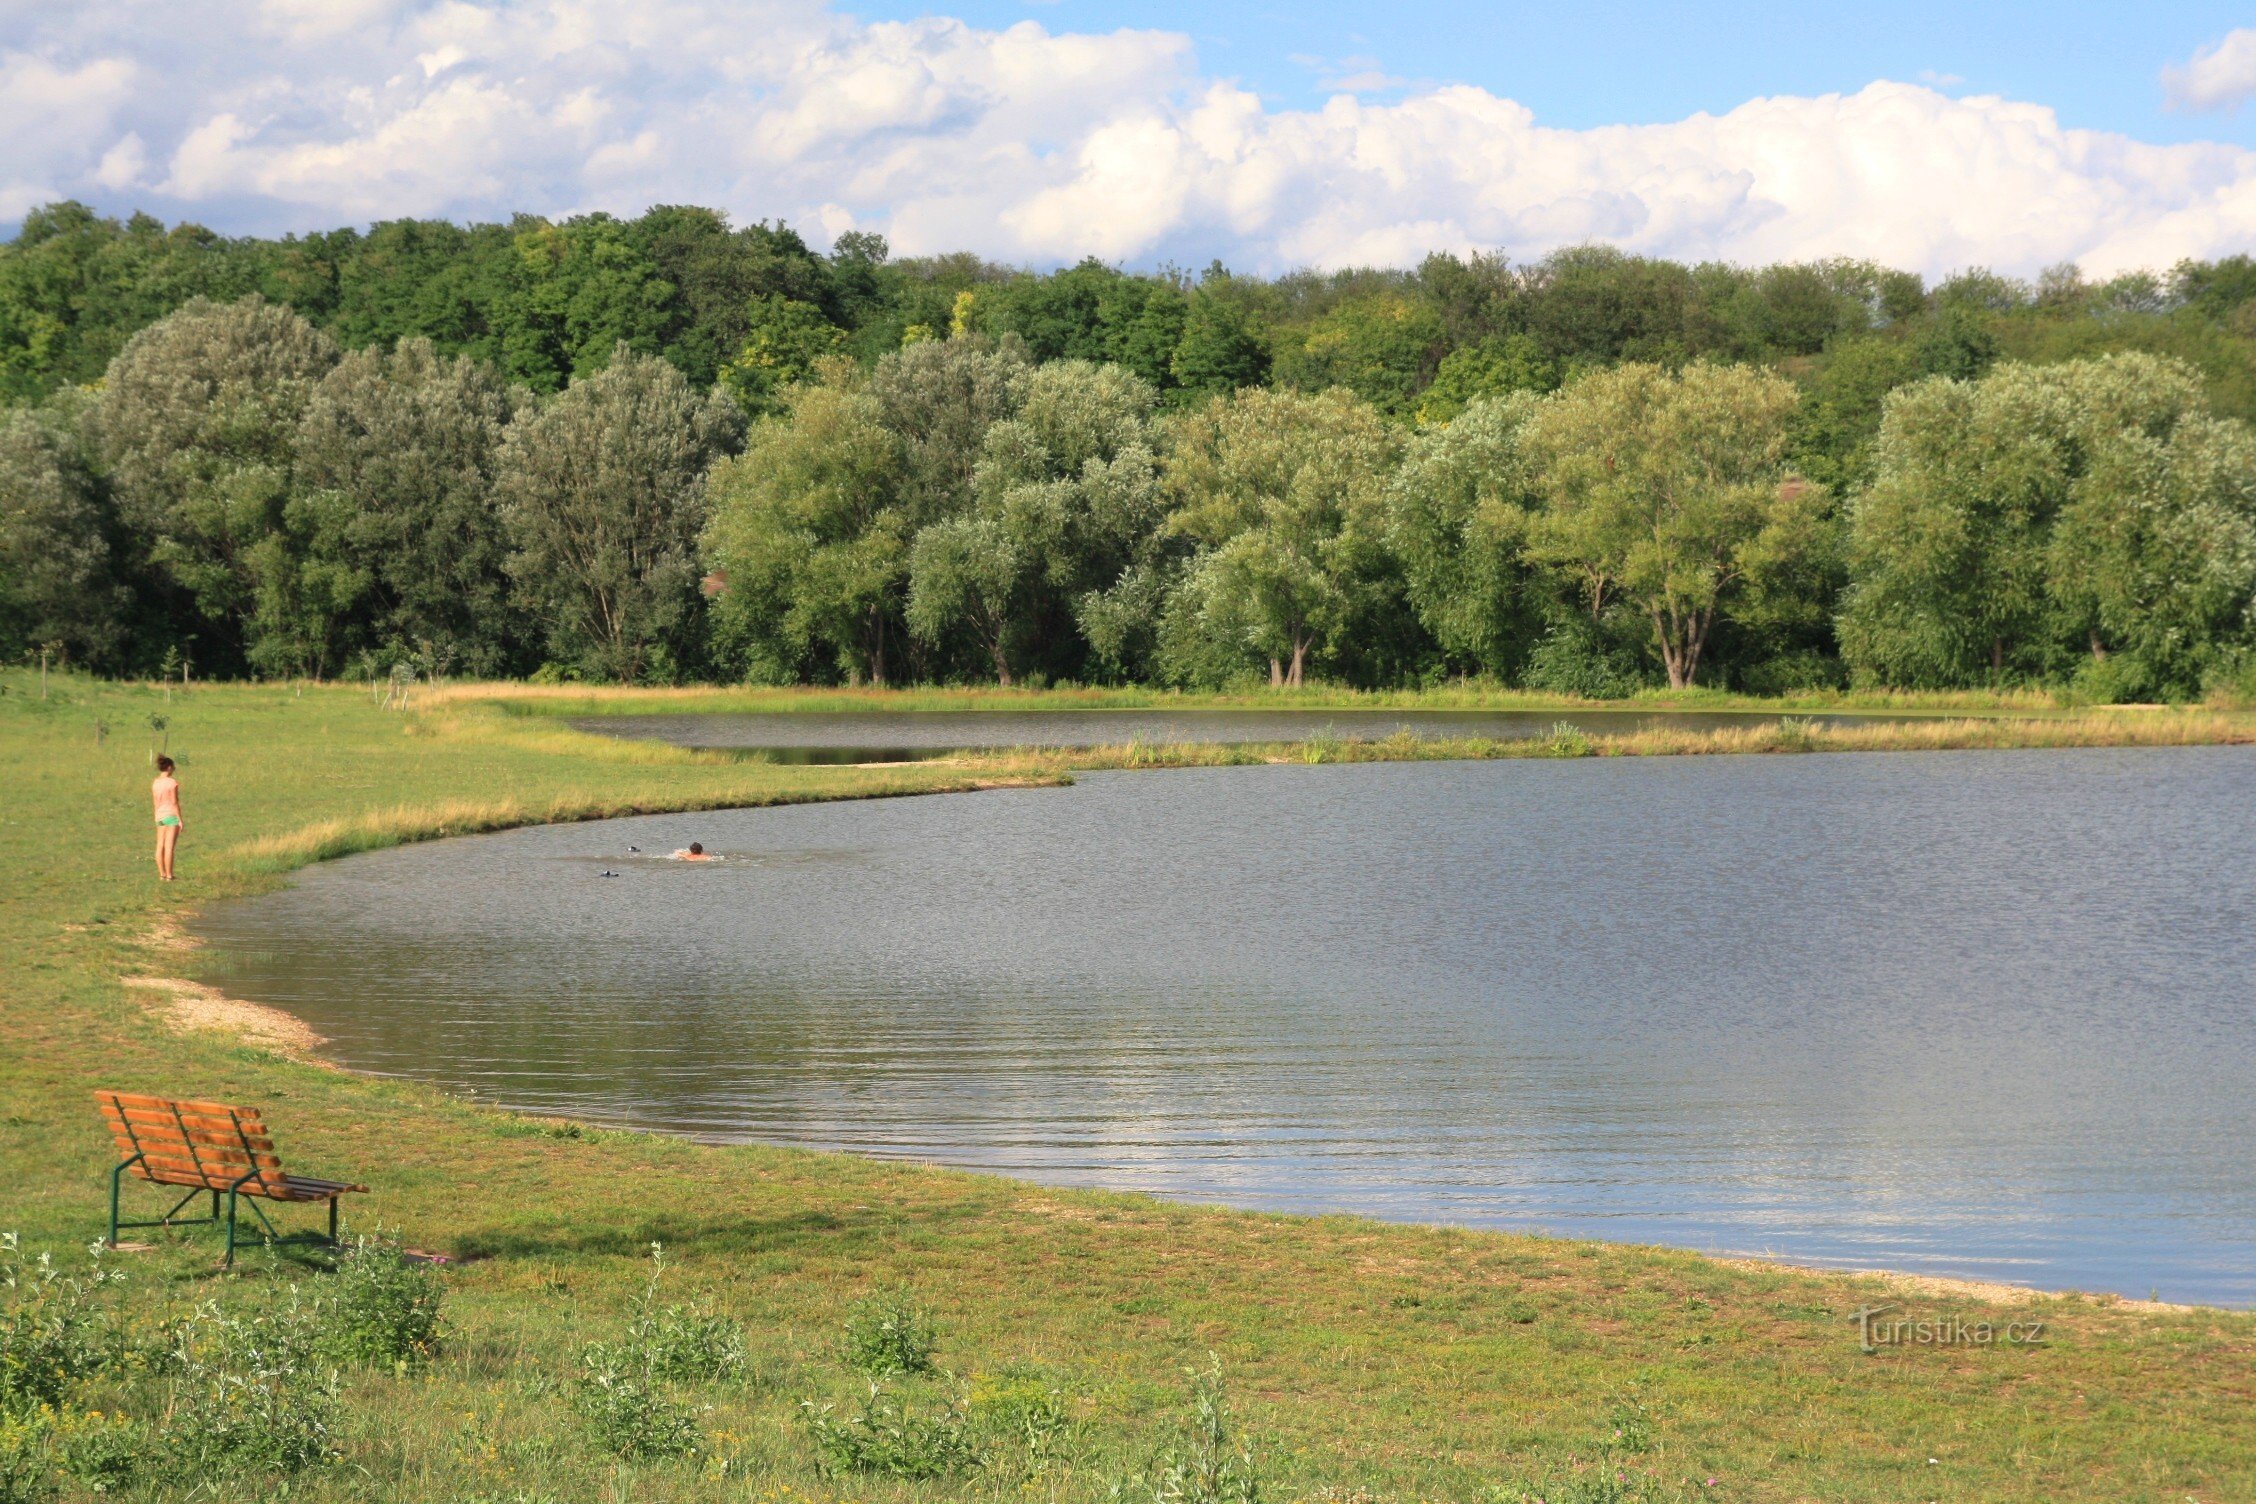 Øvre vådområde og reservoir